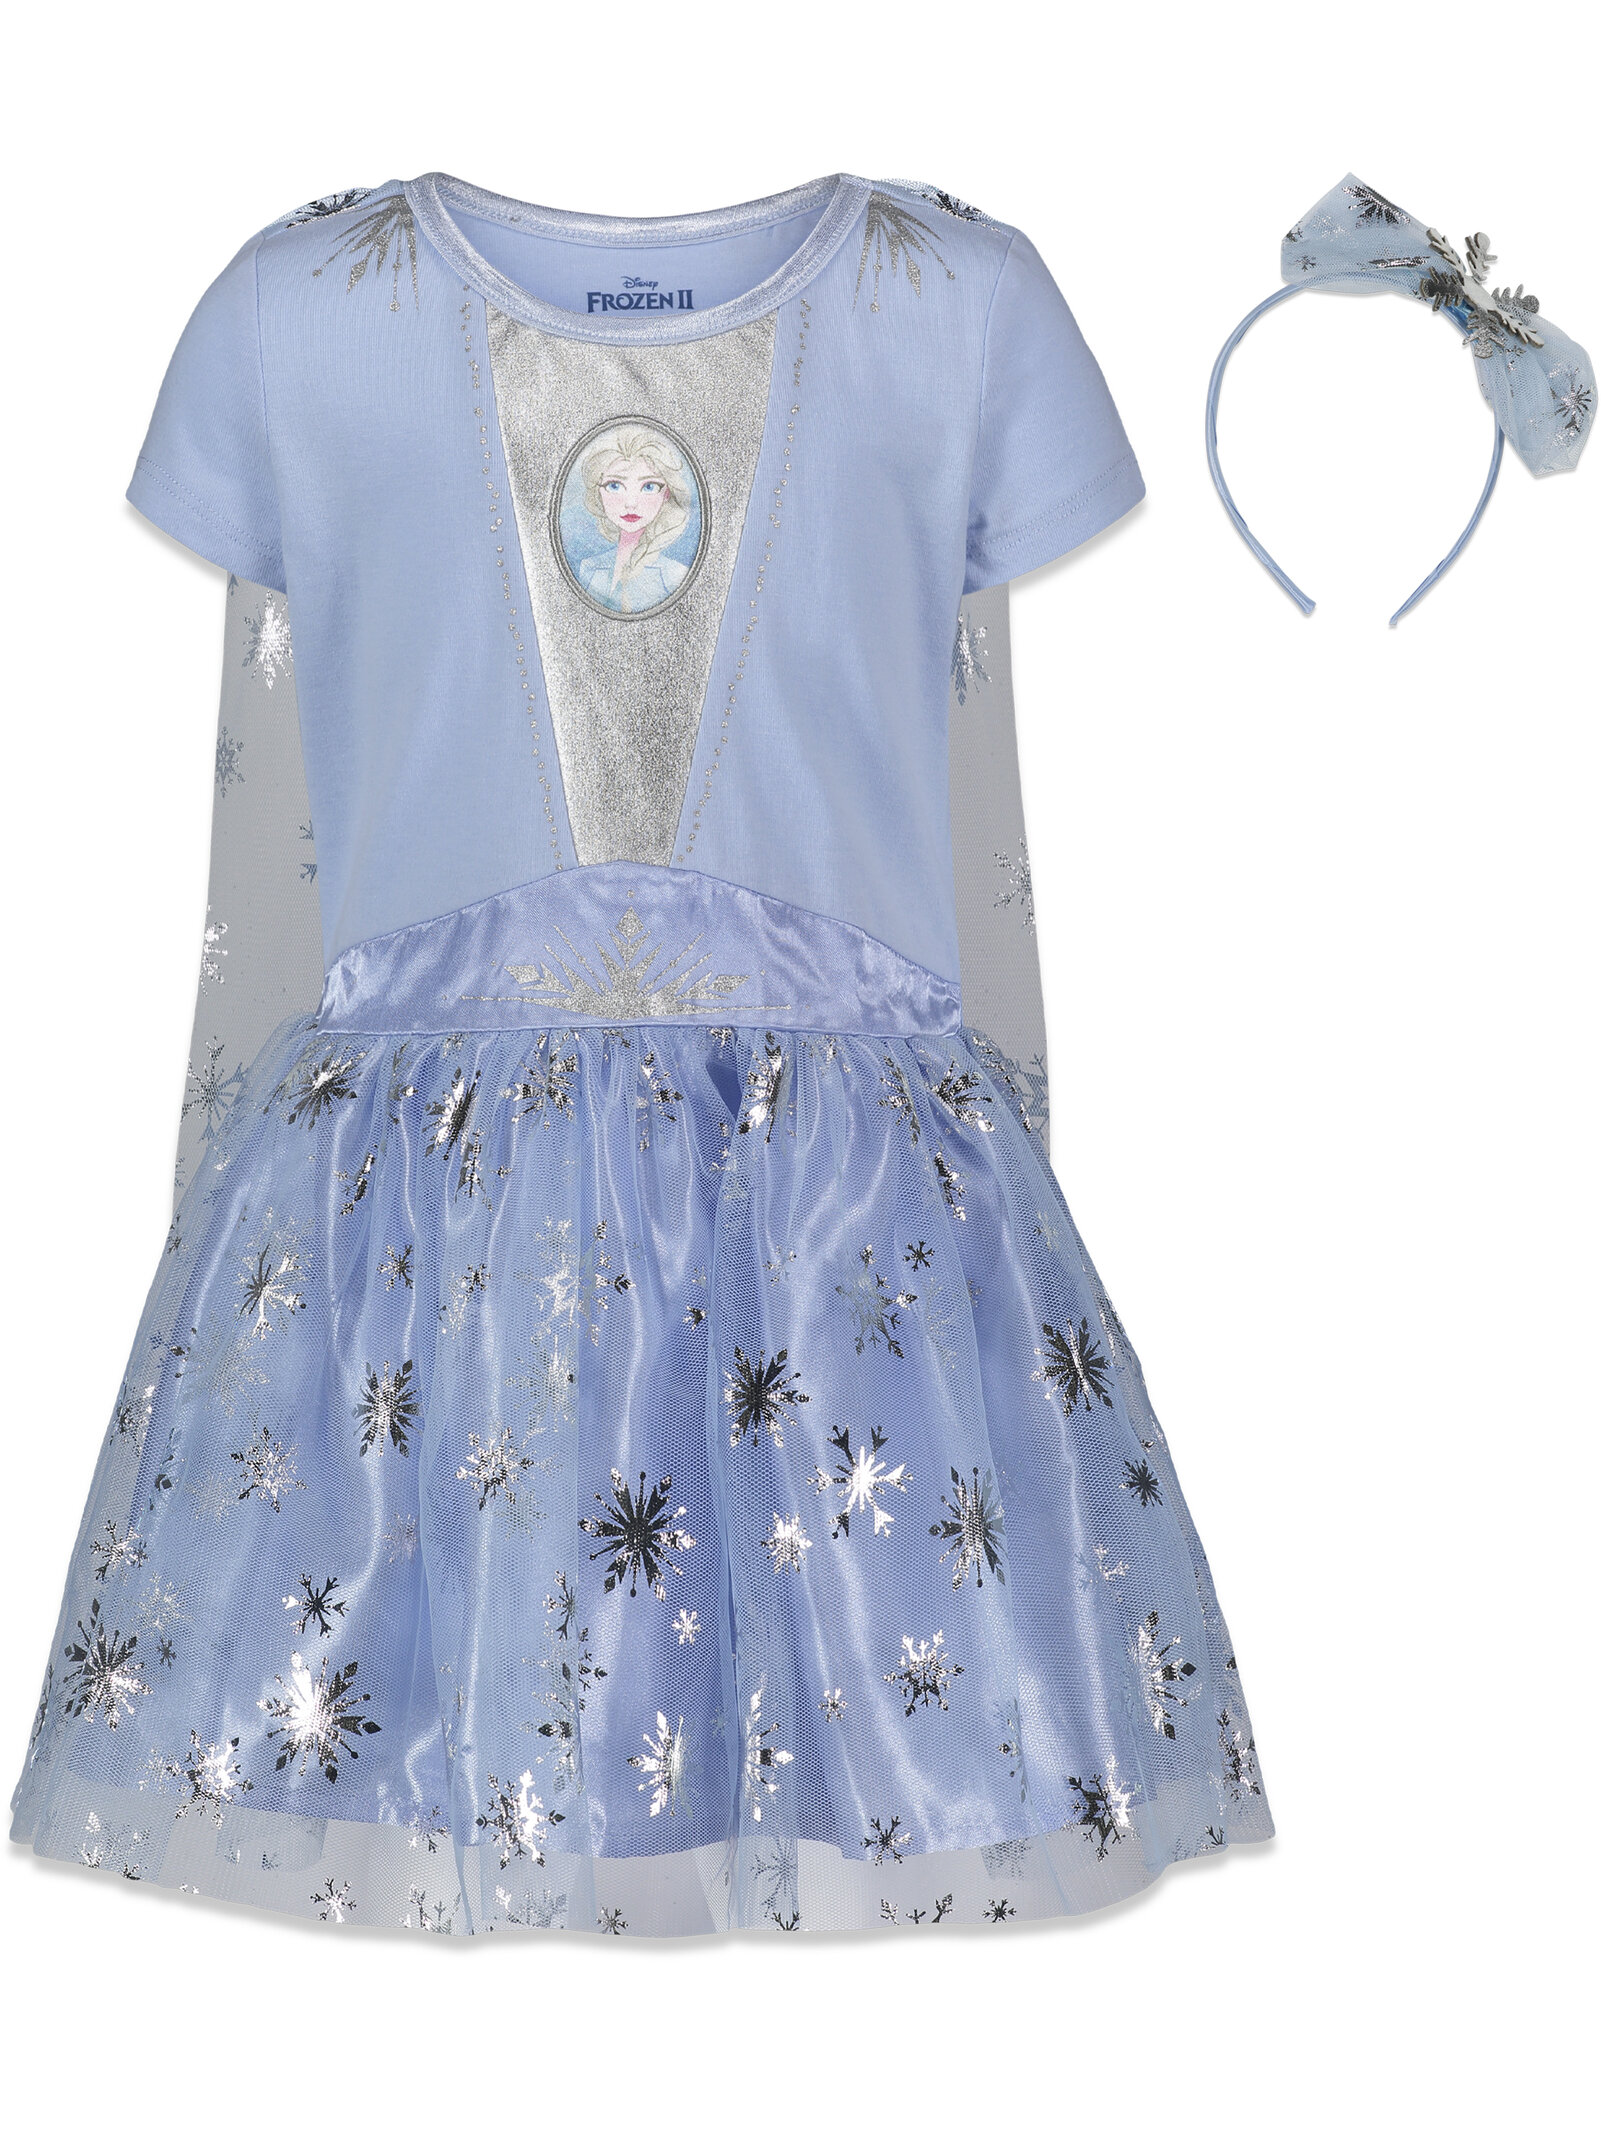 Disney Frozen Elsa Toddler Girls Gown and Headband Toddler to Big Kid - image 1 of 5